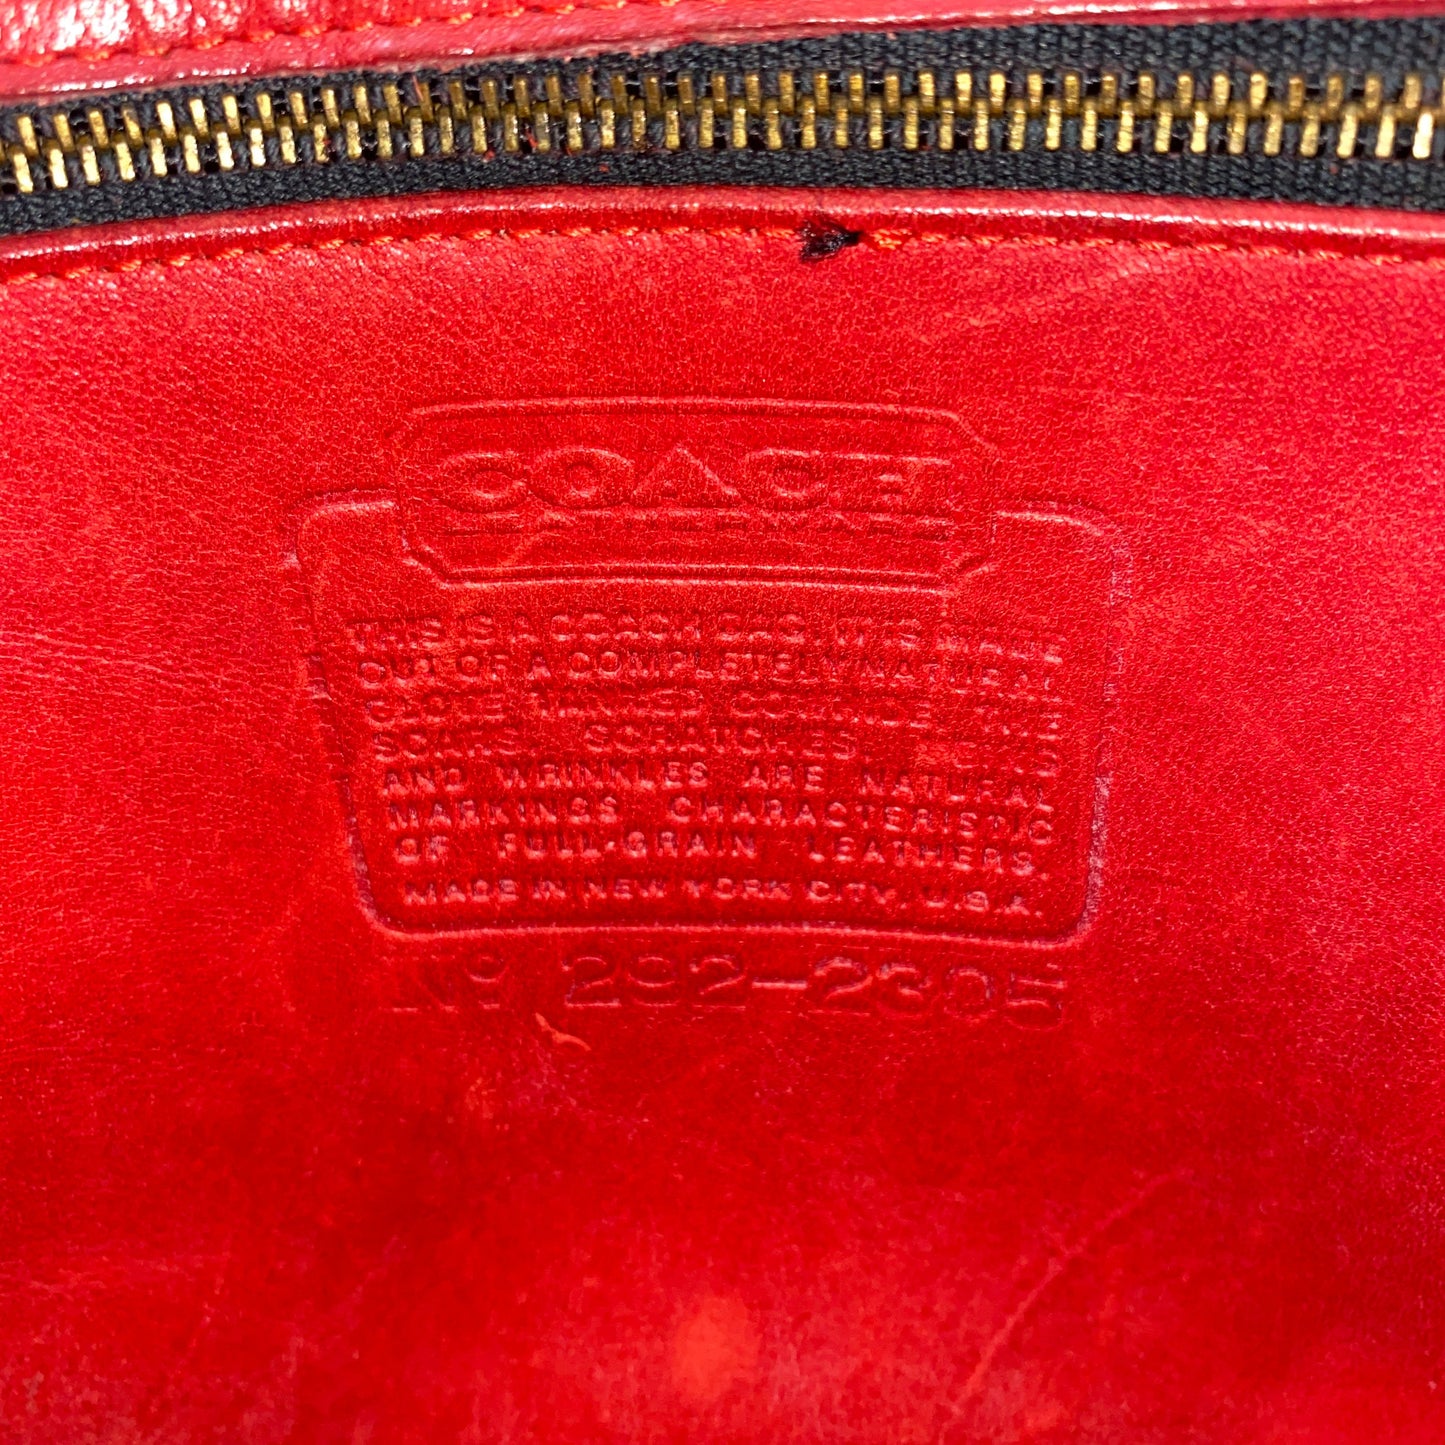 1980s Coach NYC Buckle Bag Medium Red Leather Crossbody Vintage Saddle Flap Messenger Bag Rocker Minimalist / Style 9590